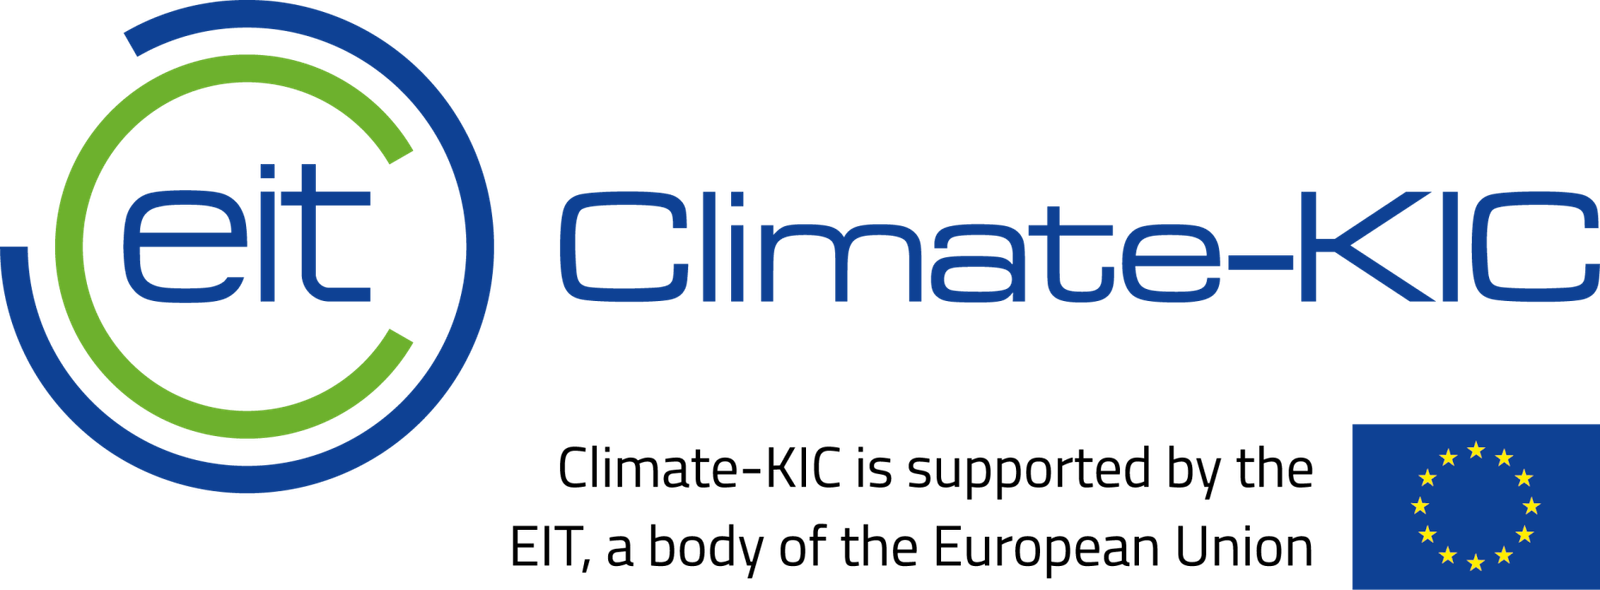 Climate-KIC - Paul Watkiss Associates - Climate Change Adaptation